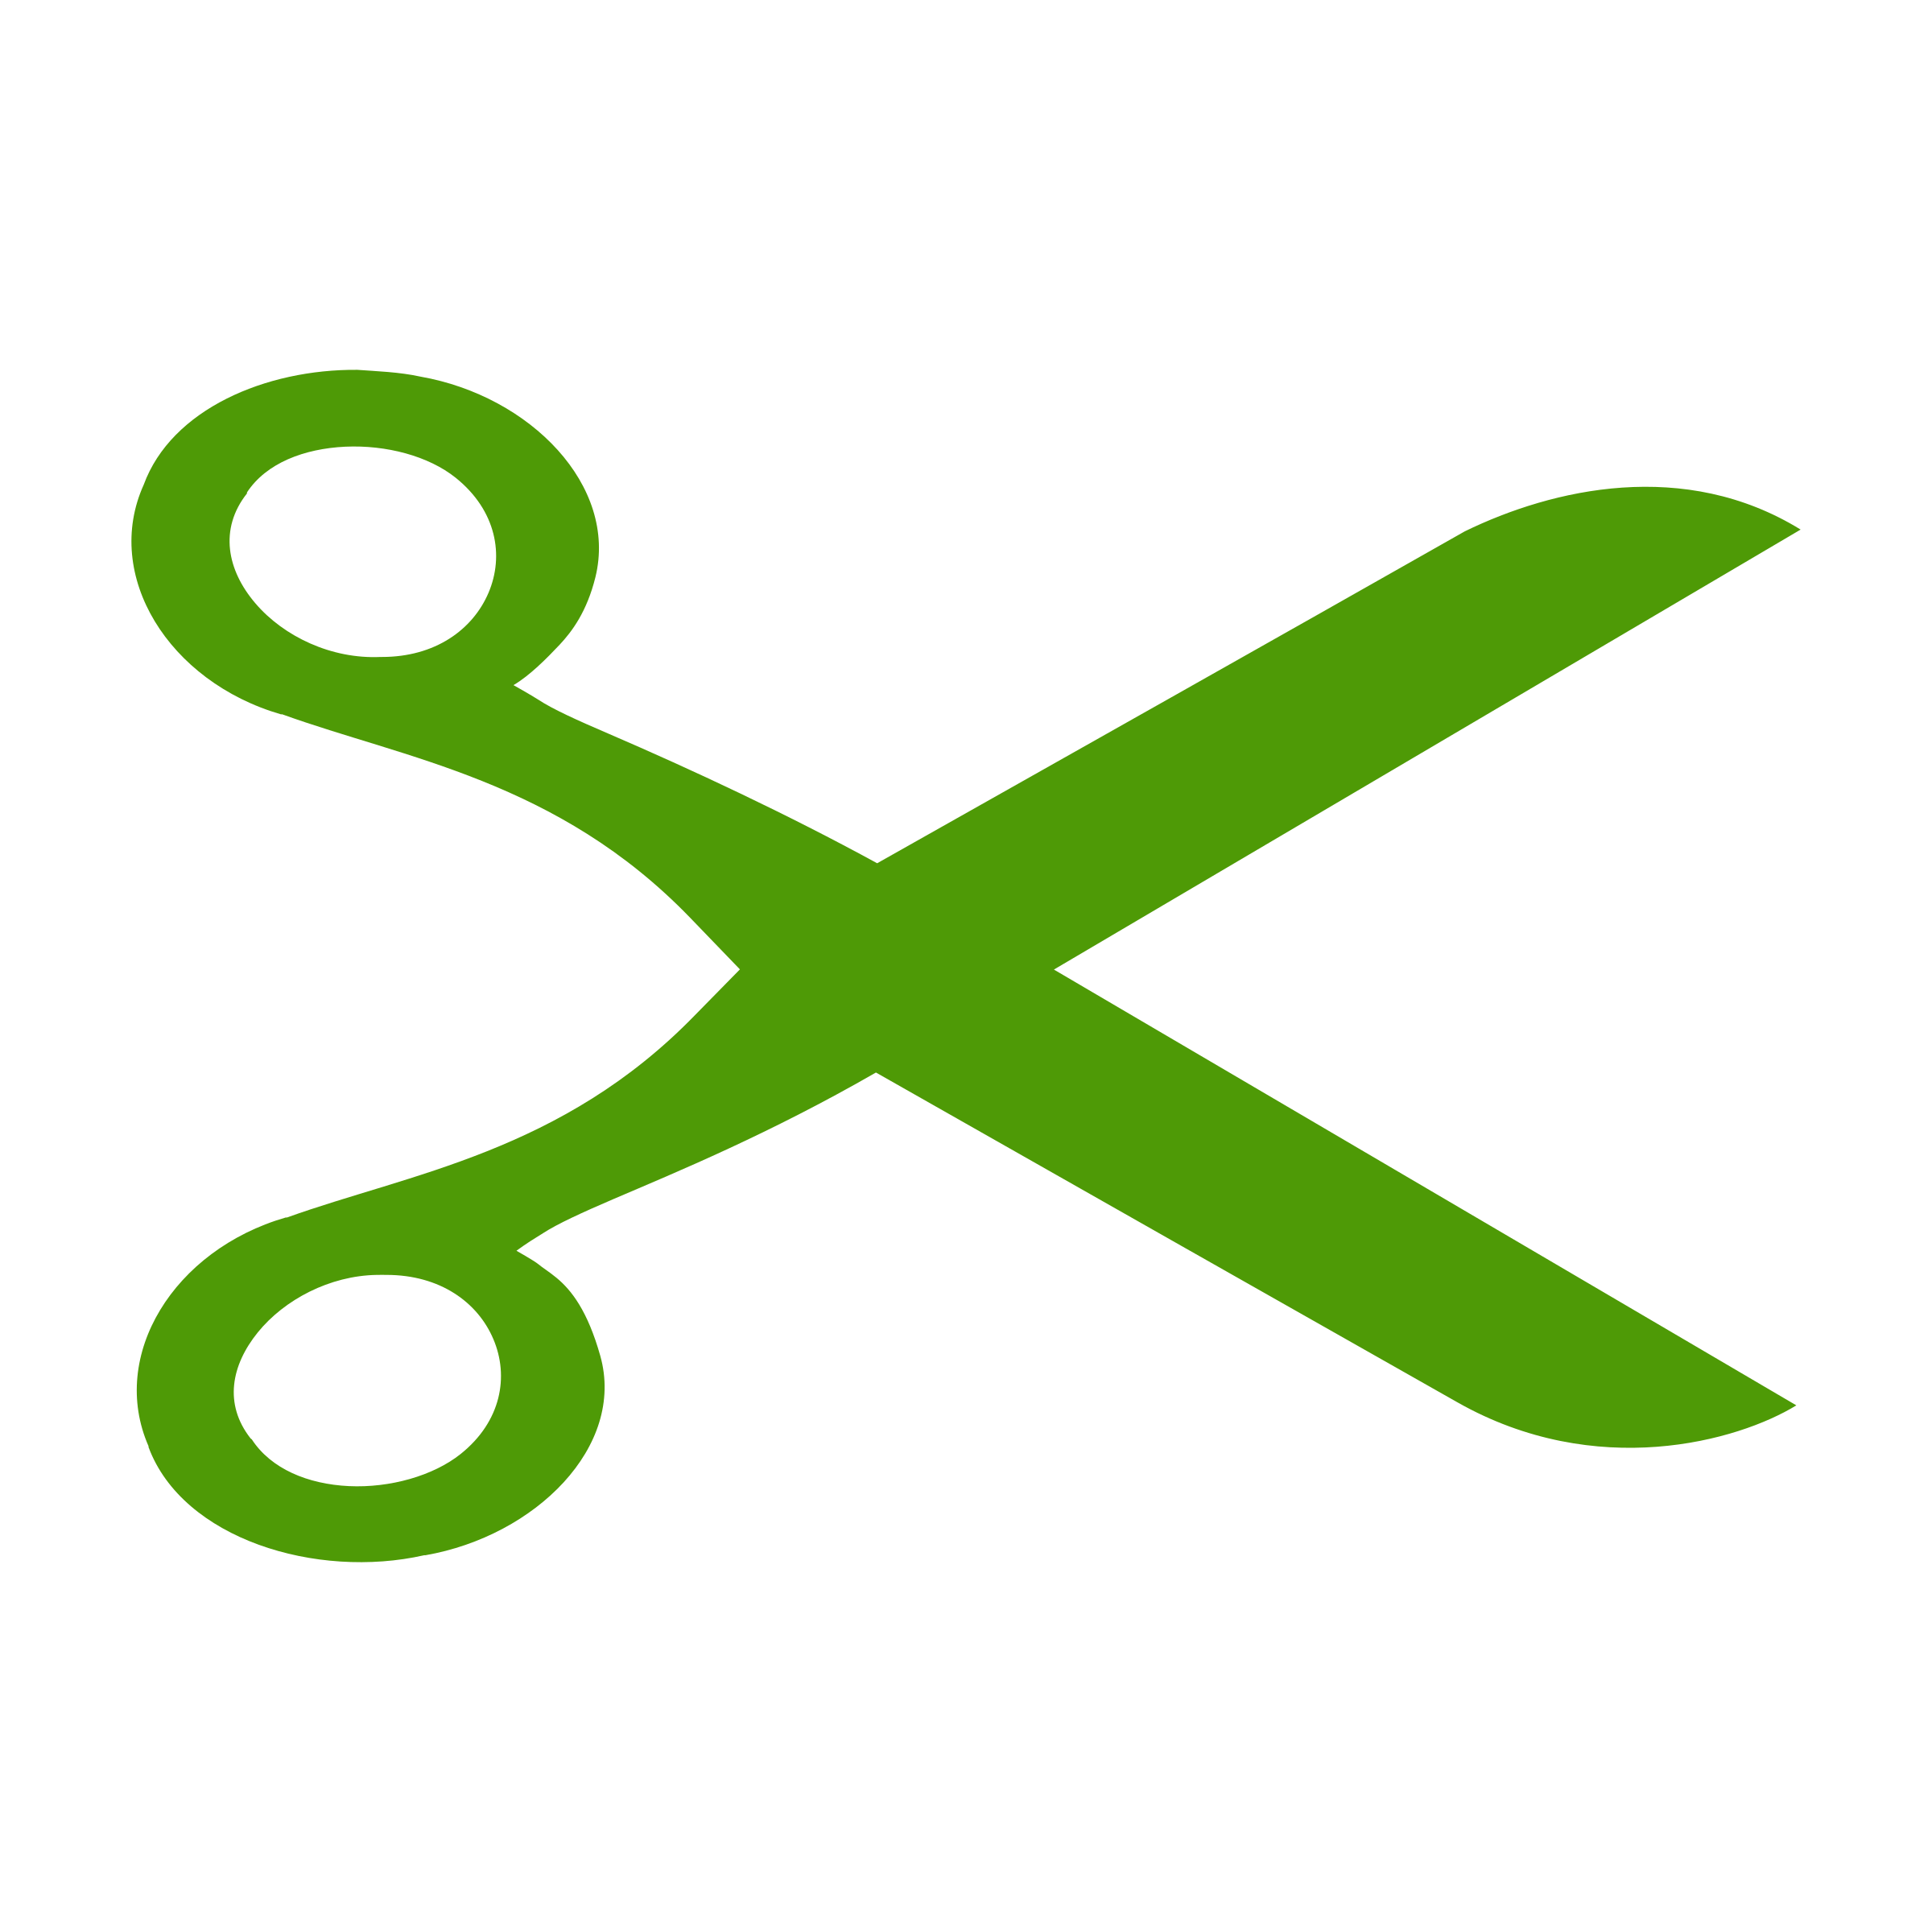 Clipart openclipart scissors logo in green